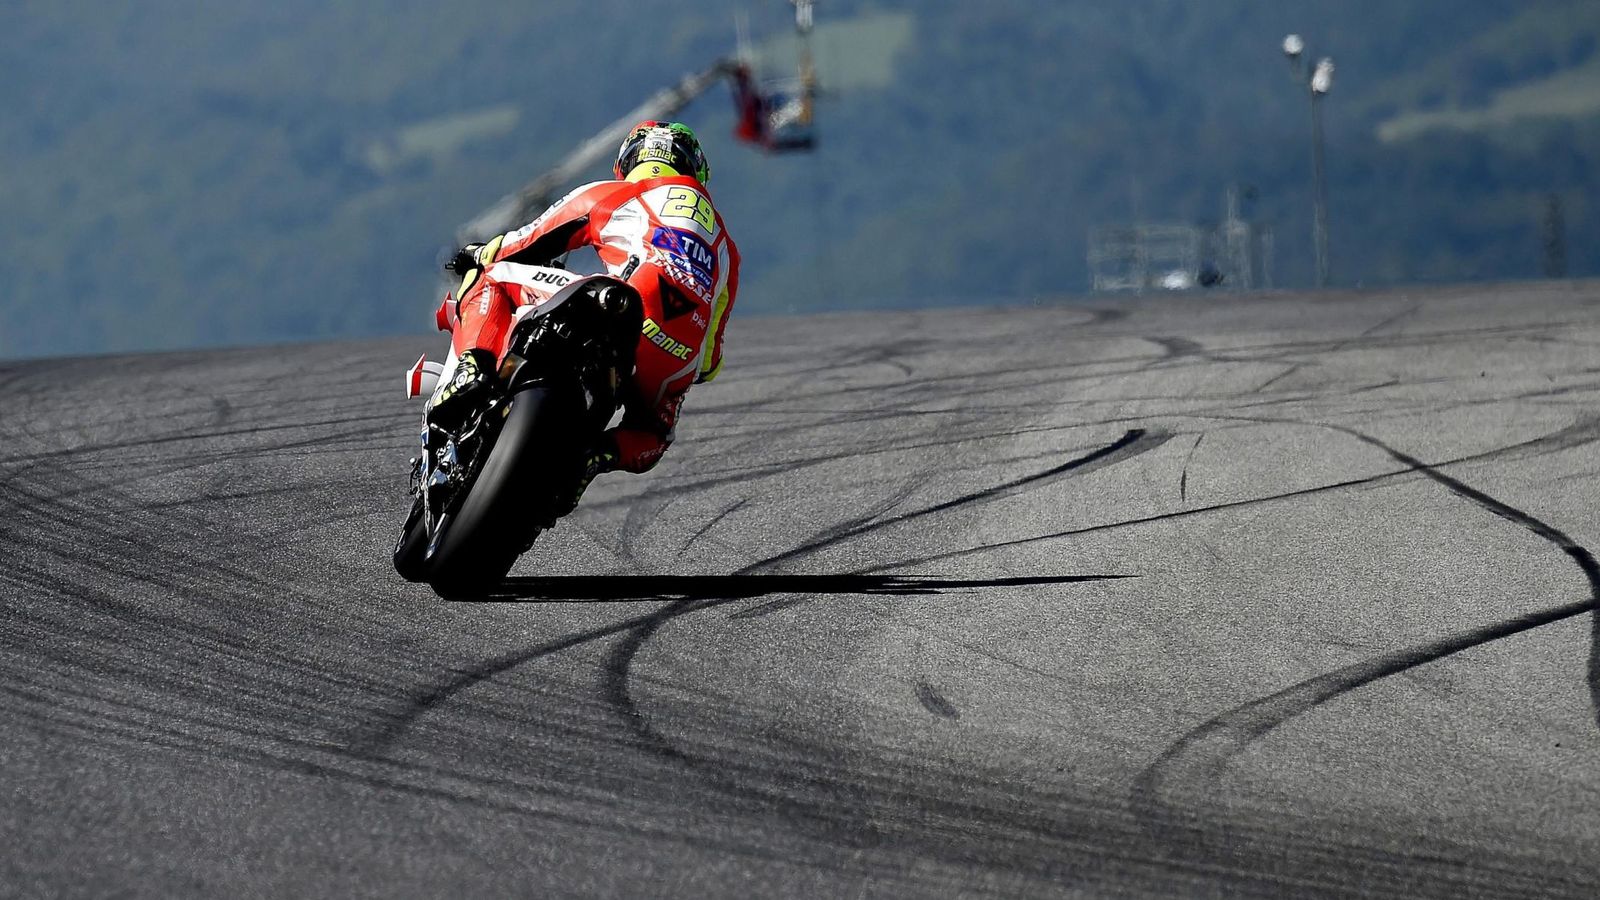 Foto: Iannone, con su Ducati, durante el Gran Premio de Italia. (EFE)